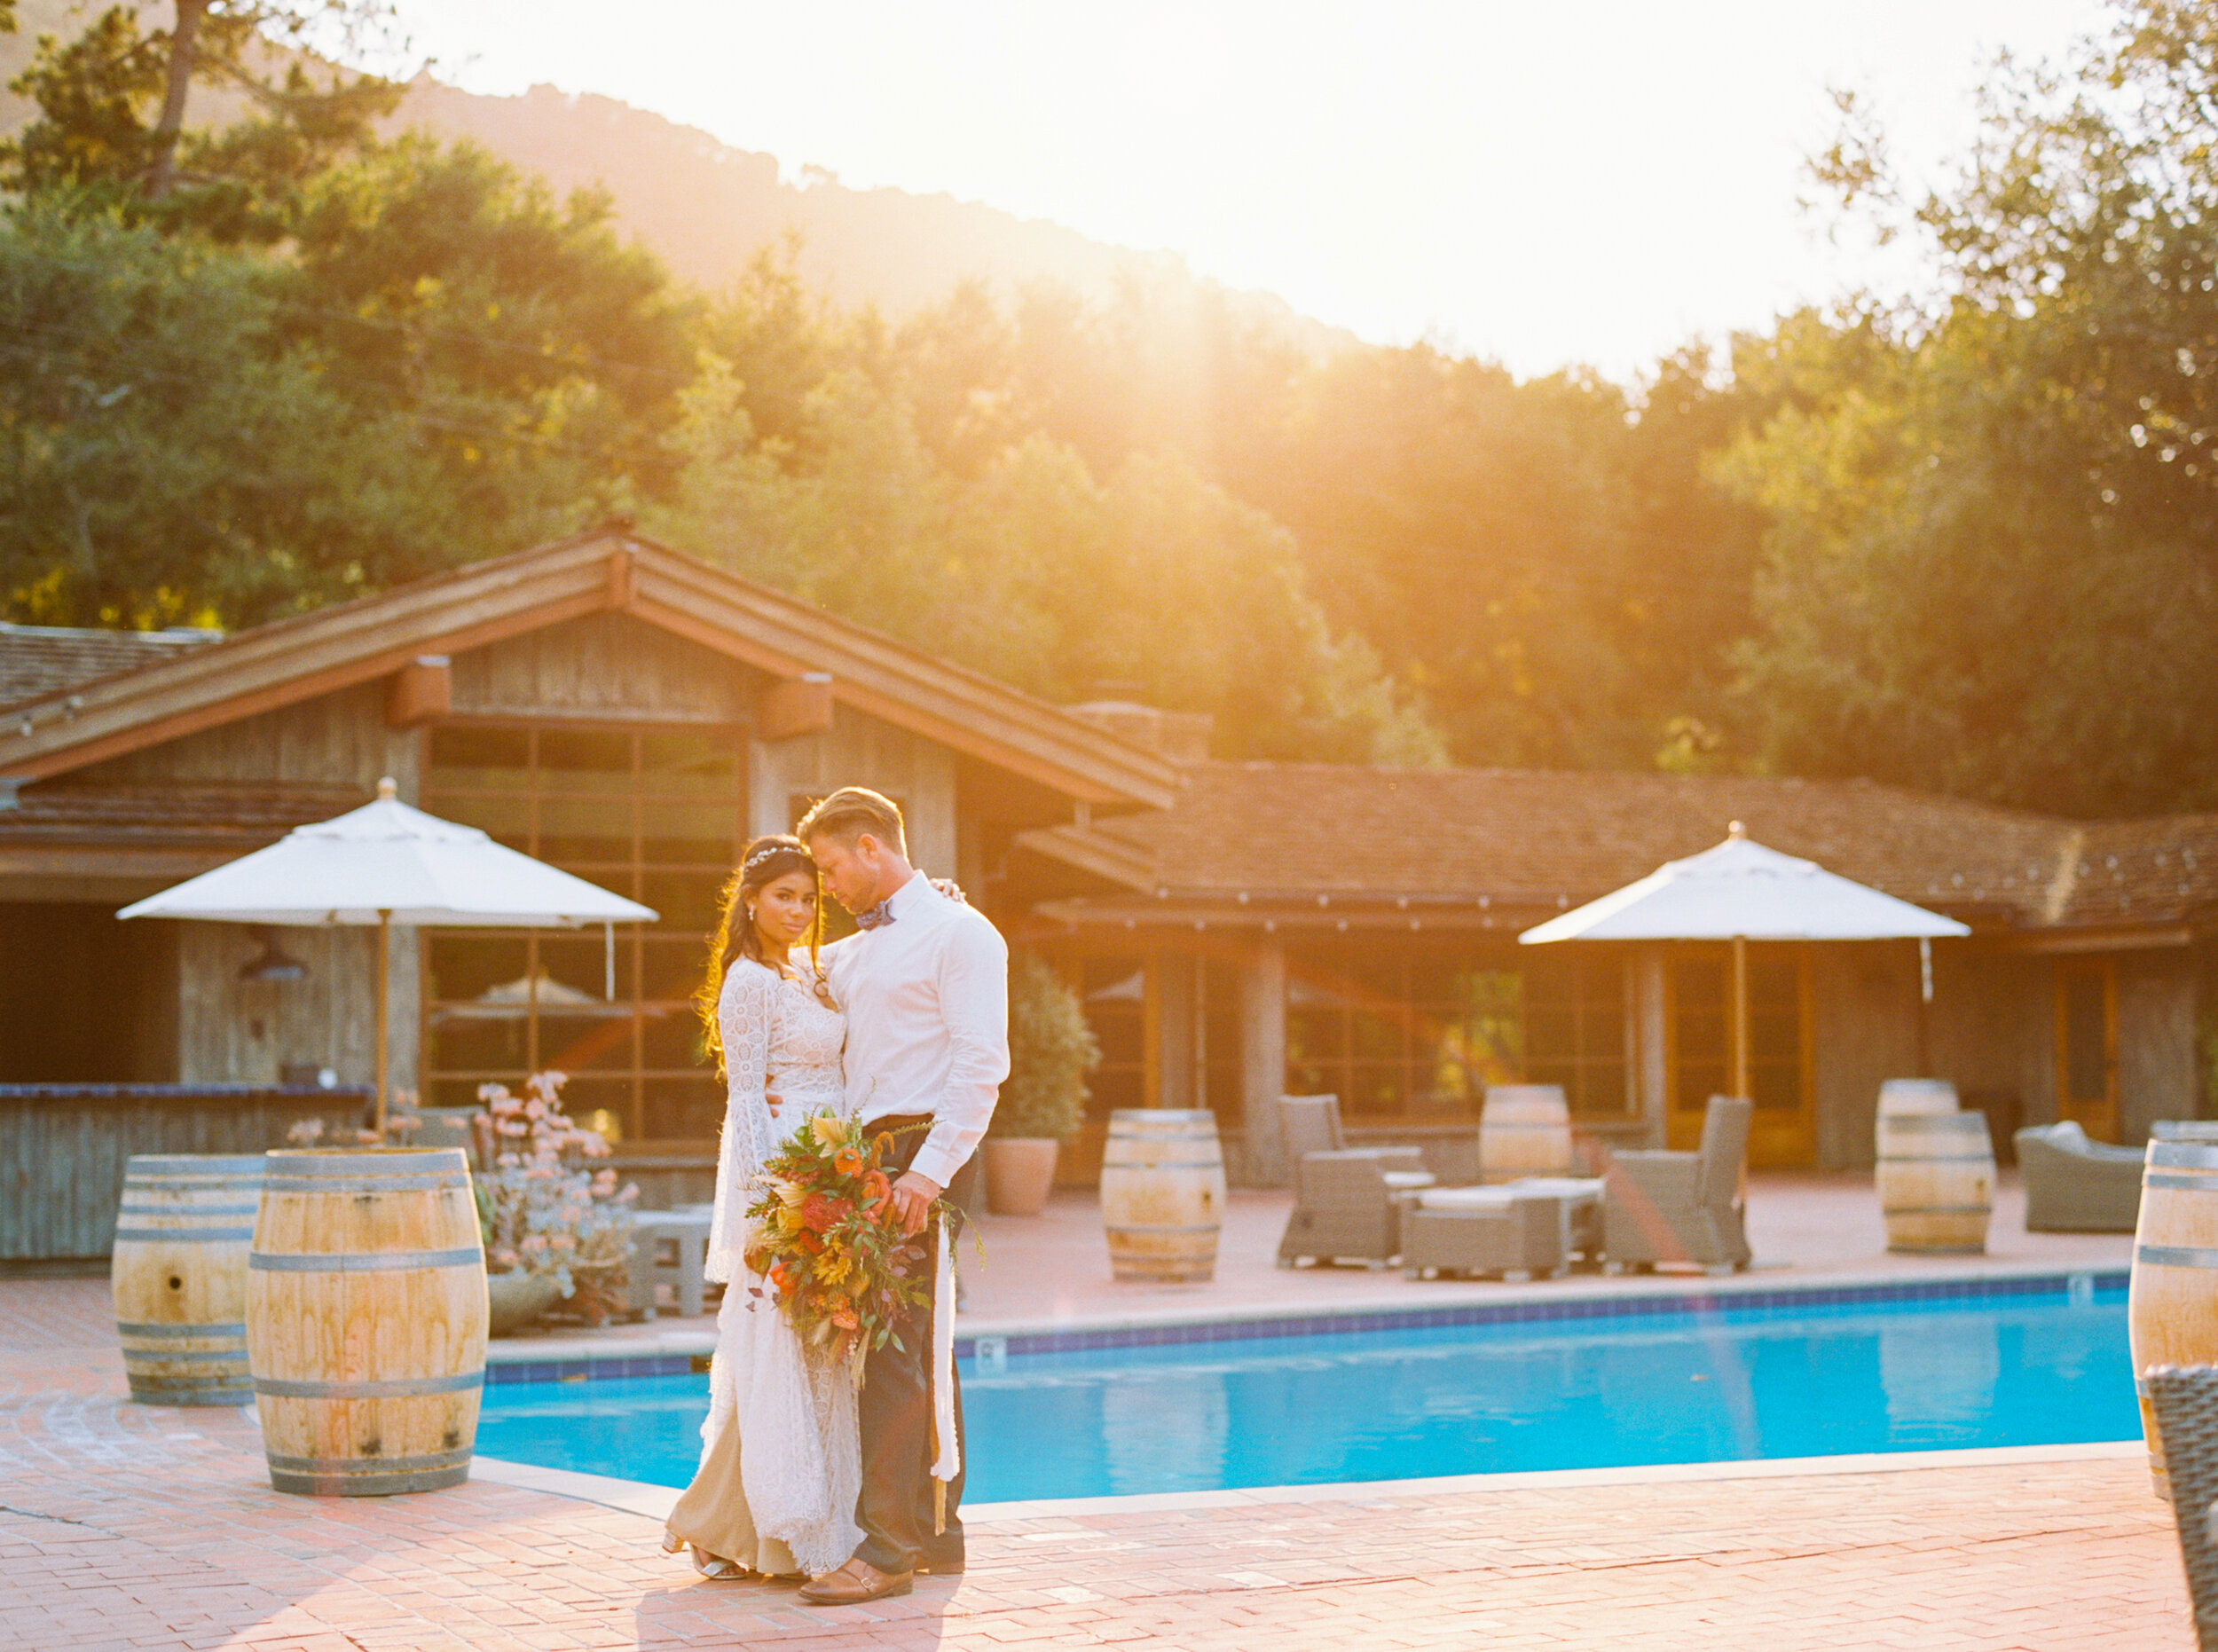 Sarahi Hadden - An Earthy Summer Boho Inspired Wedding with Sunset Hues at Gardener Ranch-75.jpg